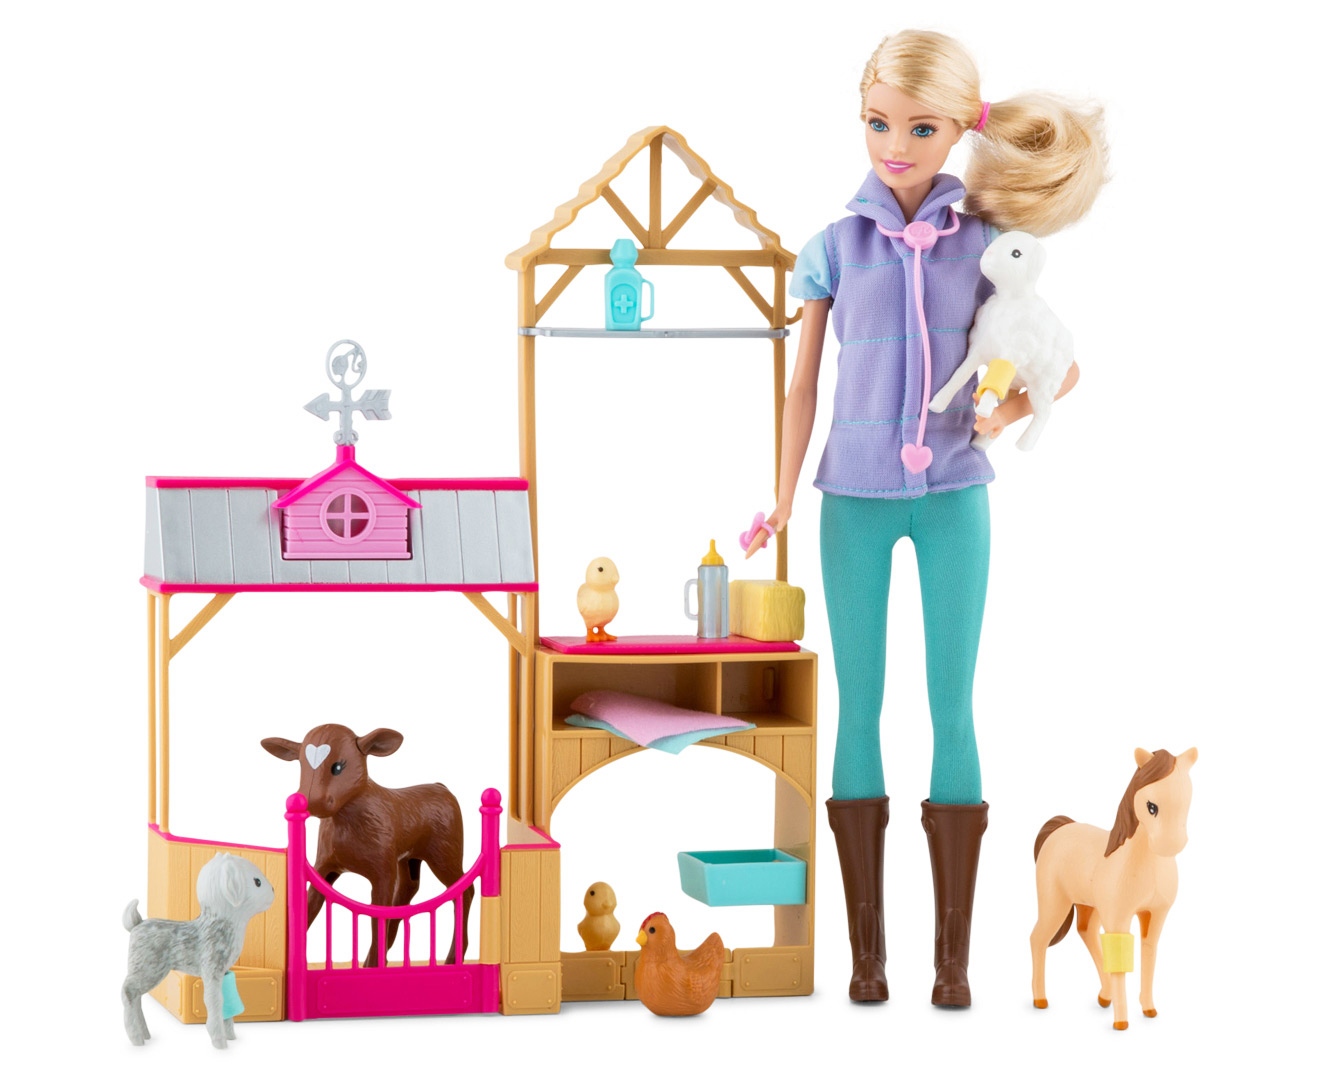 barbie farm set